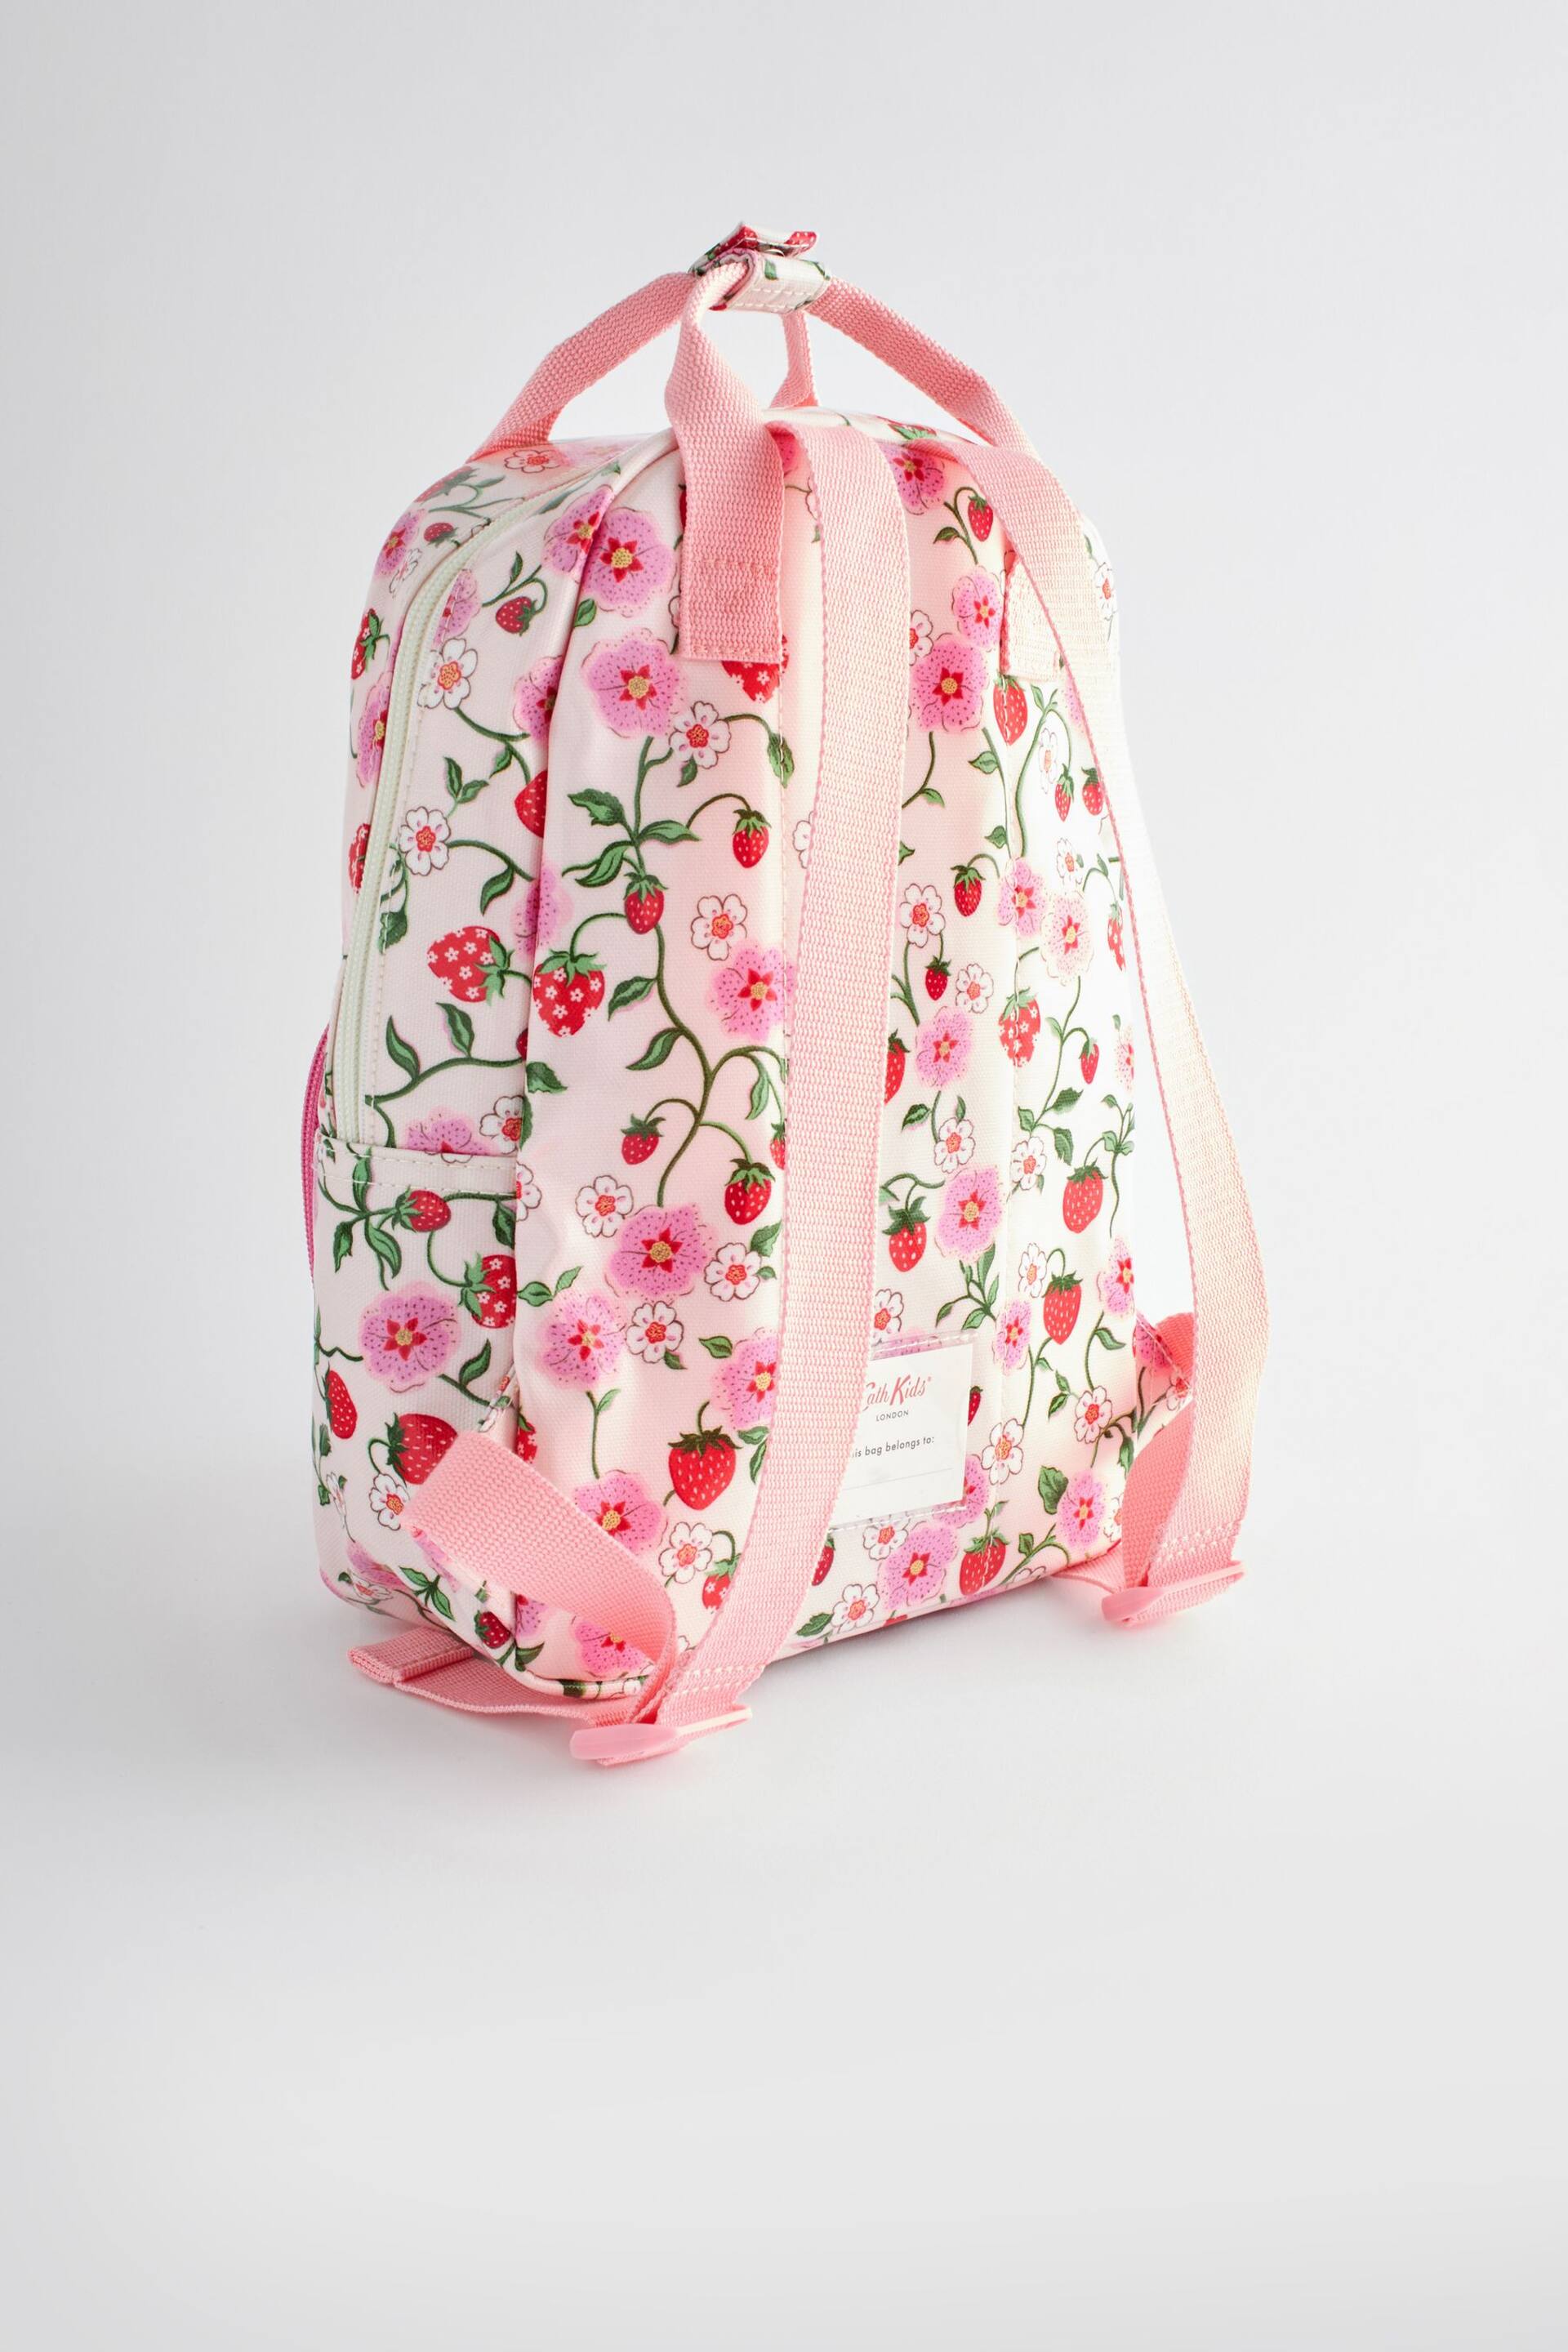 Cath Kidston Pink Strawberry Medium Backpack - Image 2 of 9